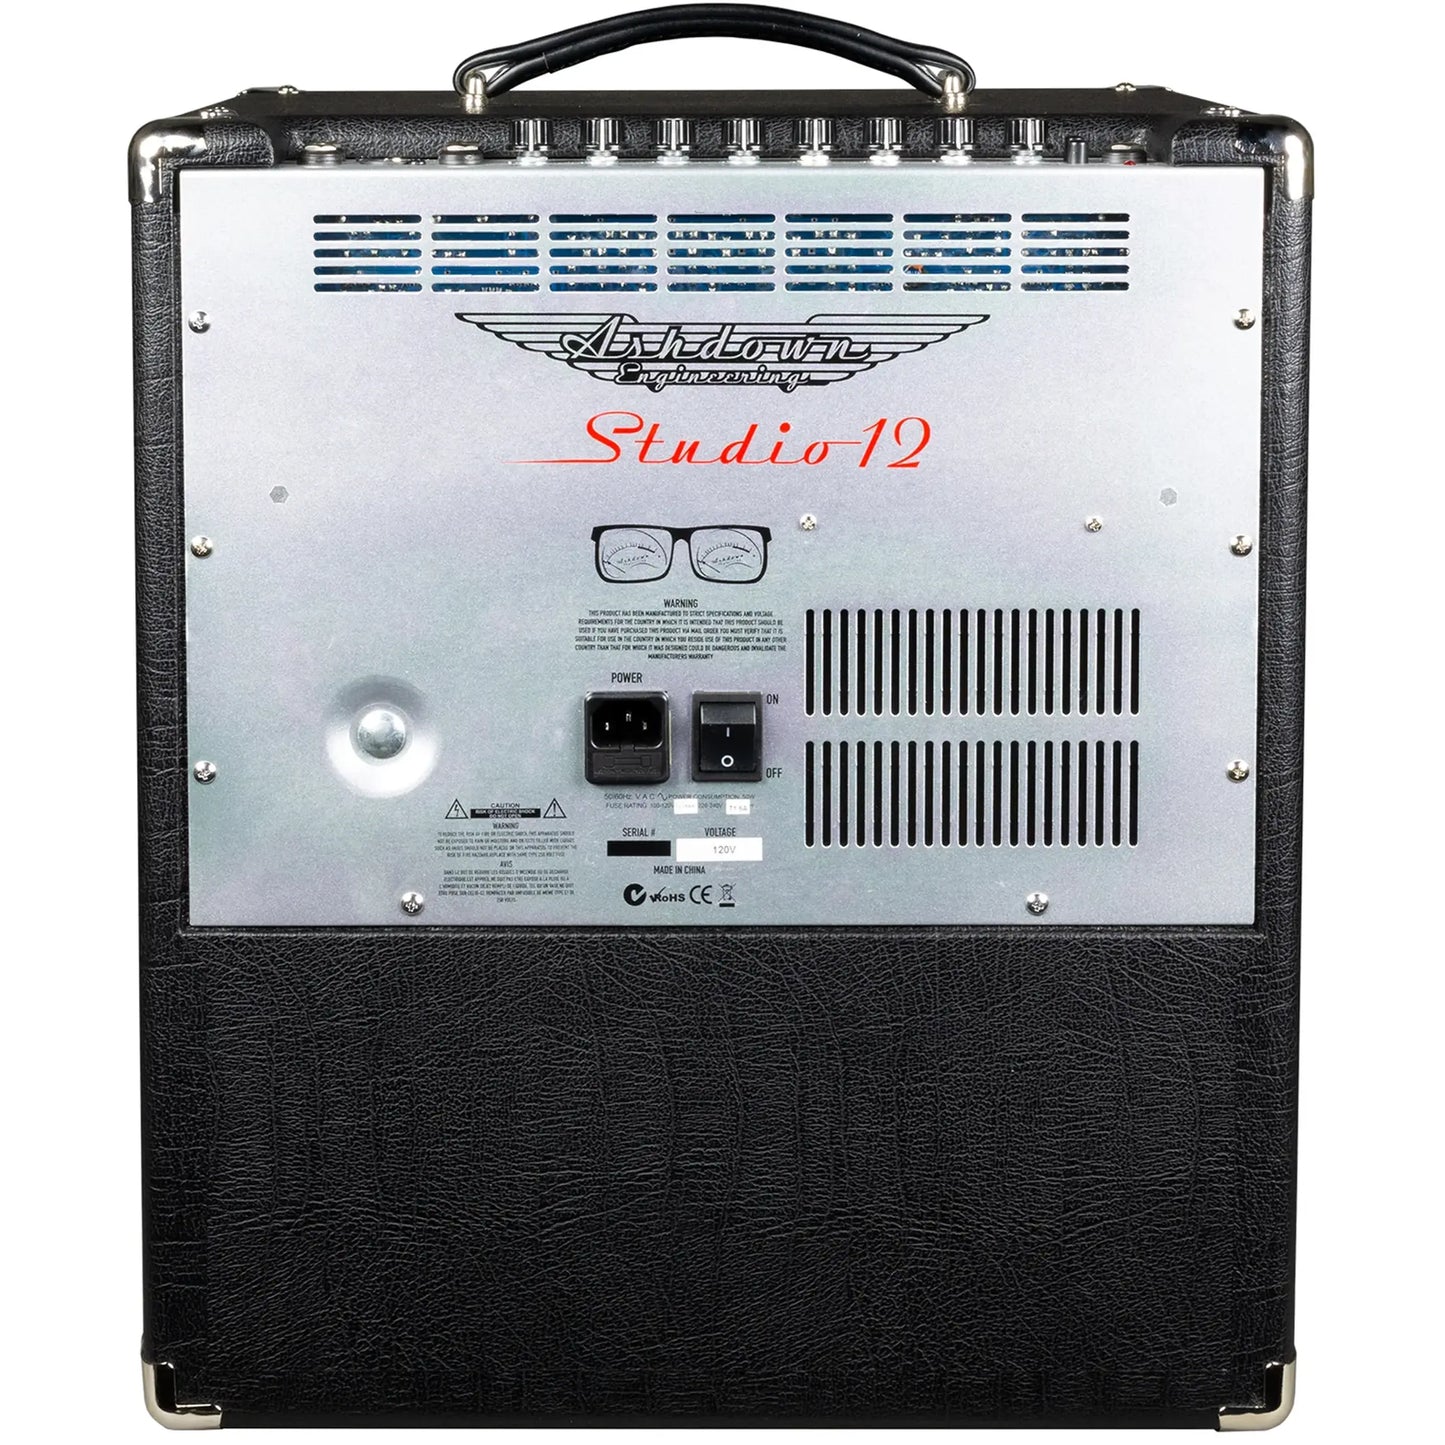 Ashdown Studio 12 1x12 inch 120-watt Bass Combo Amp